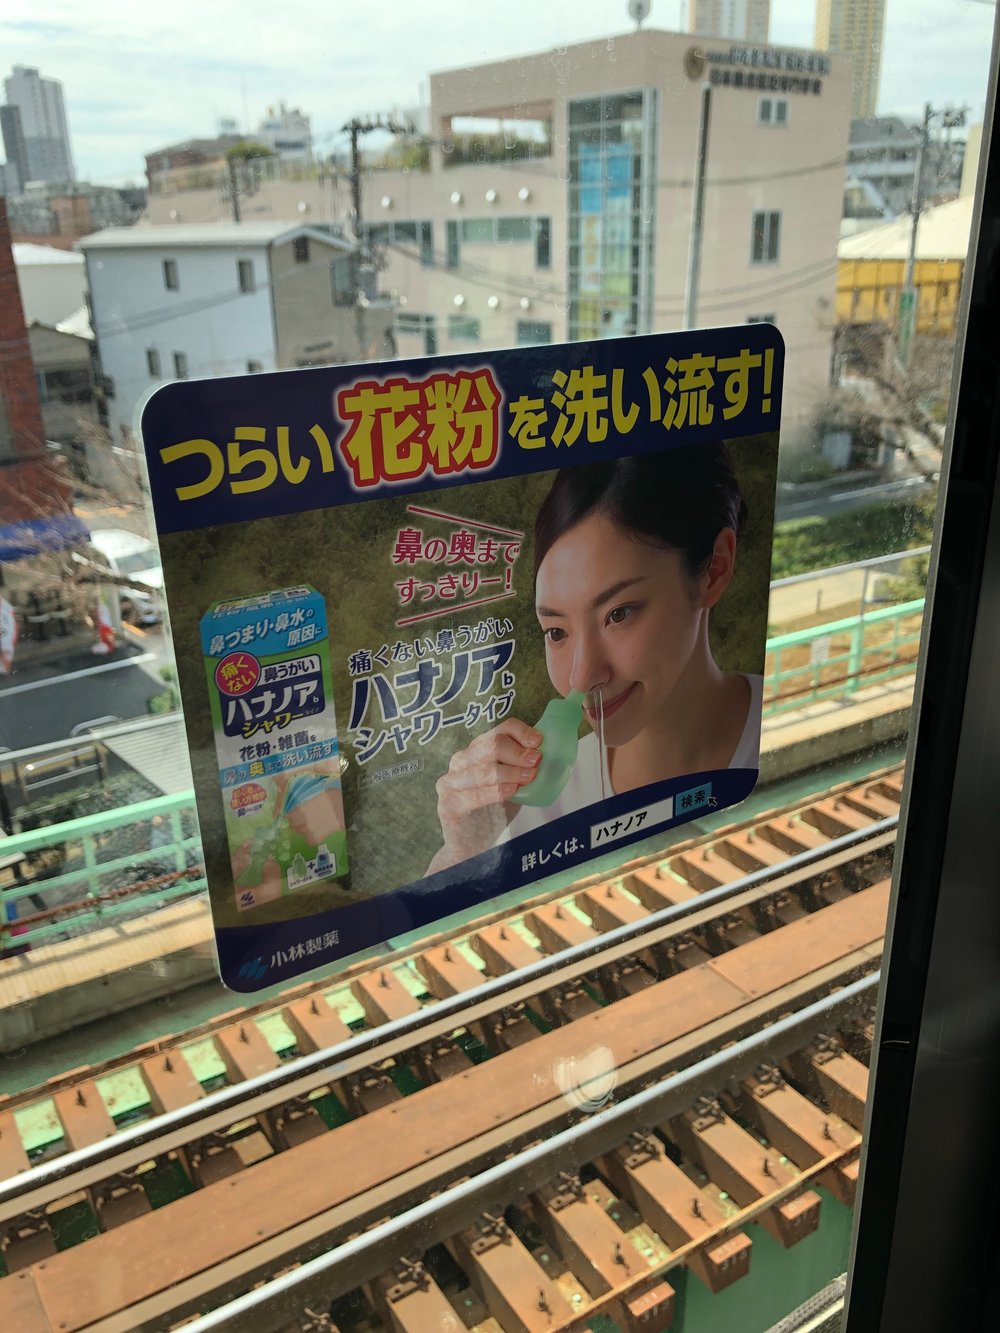 Advertisements, Tokyo.